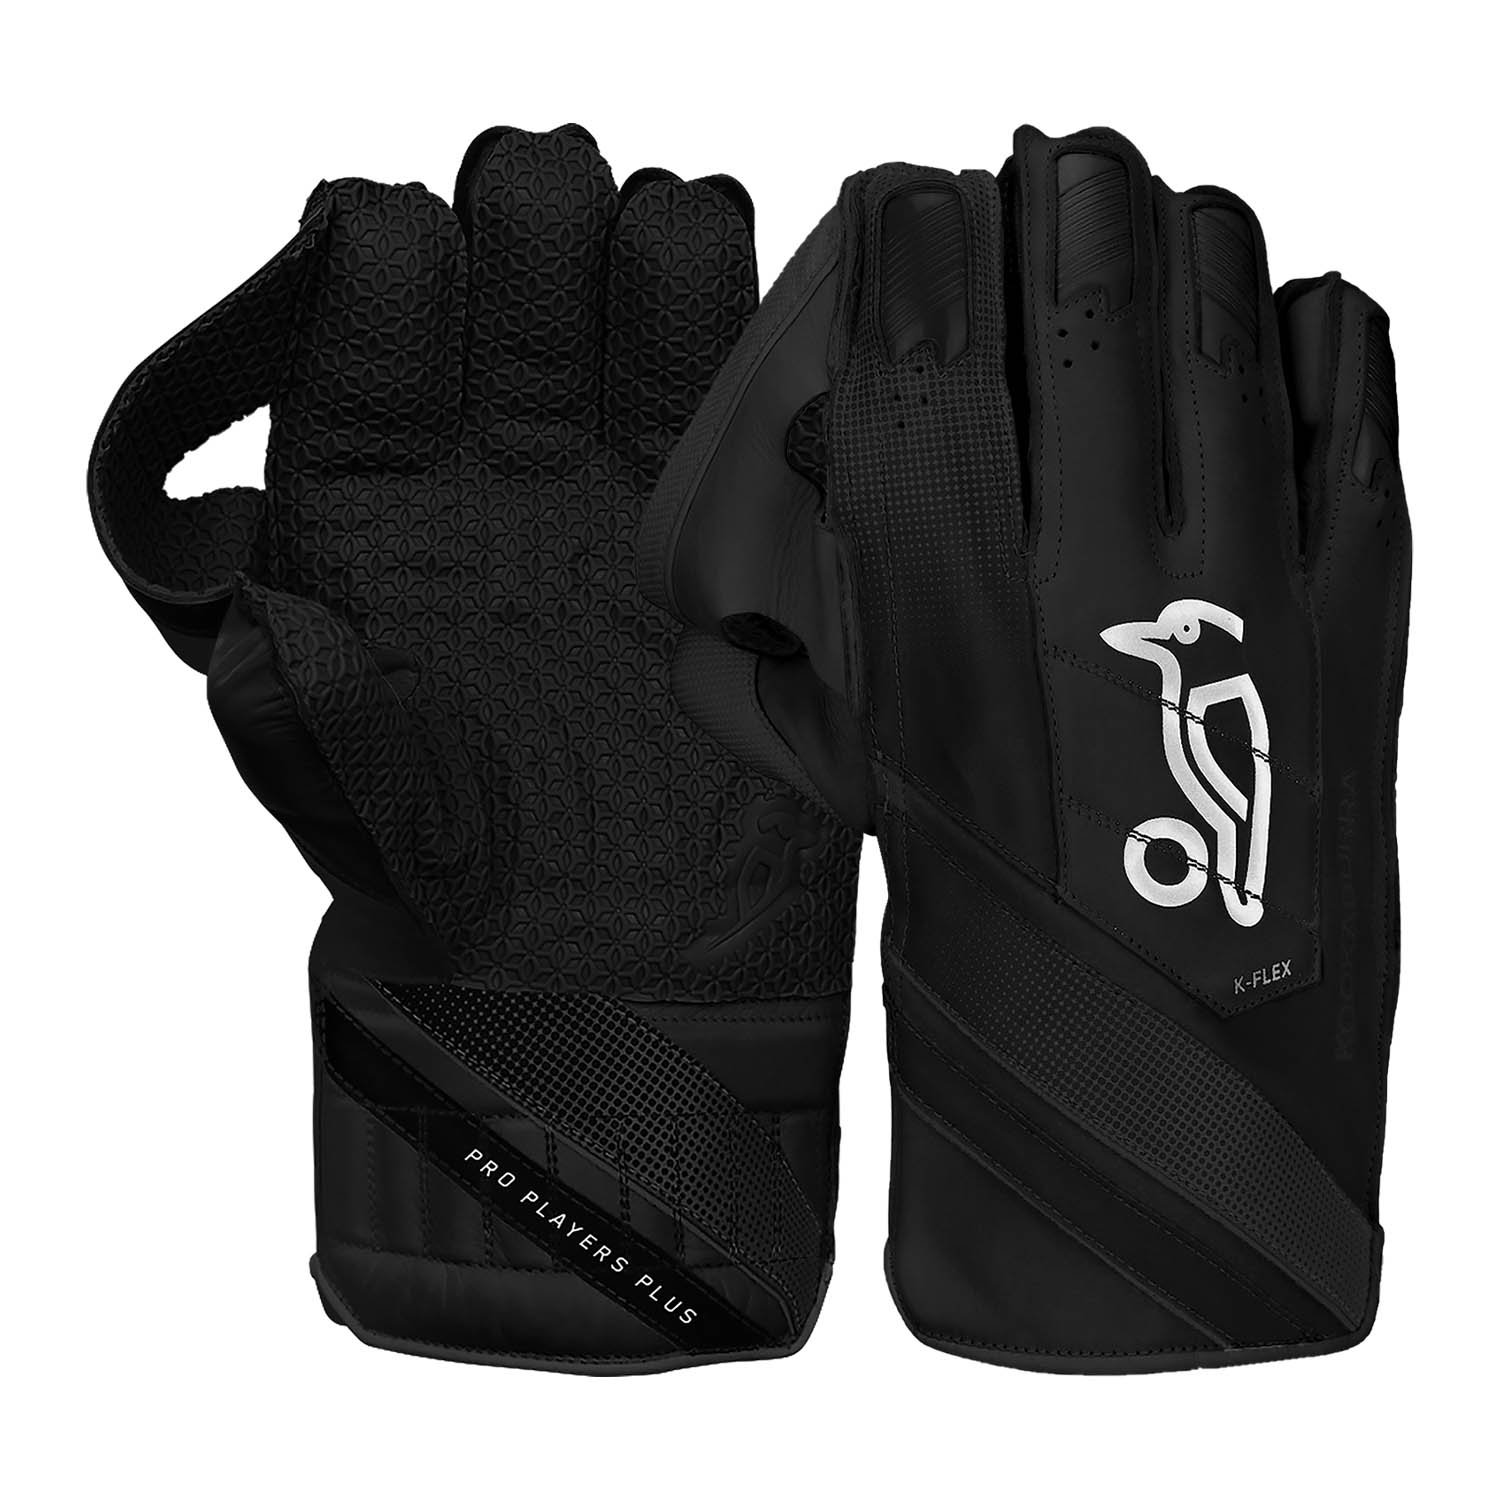 Kookaburra Pro Players Plus Wicketkeeping Gloves 3J31101